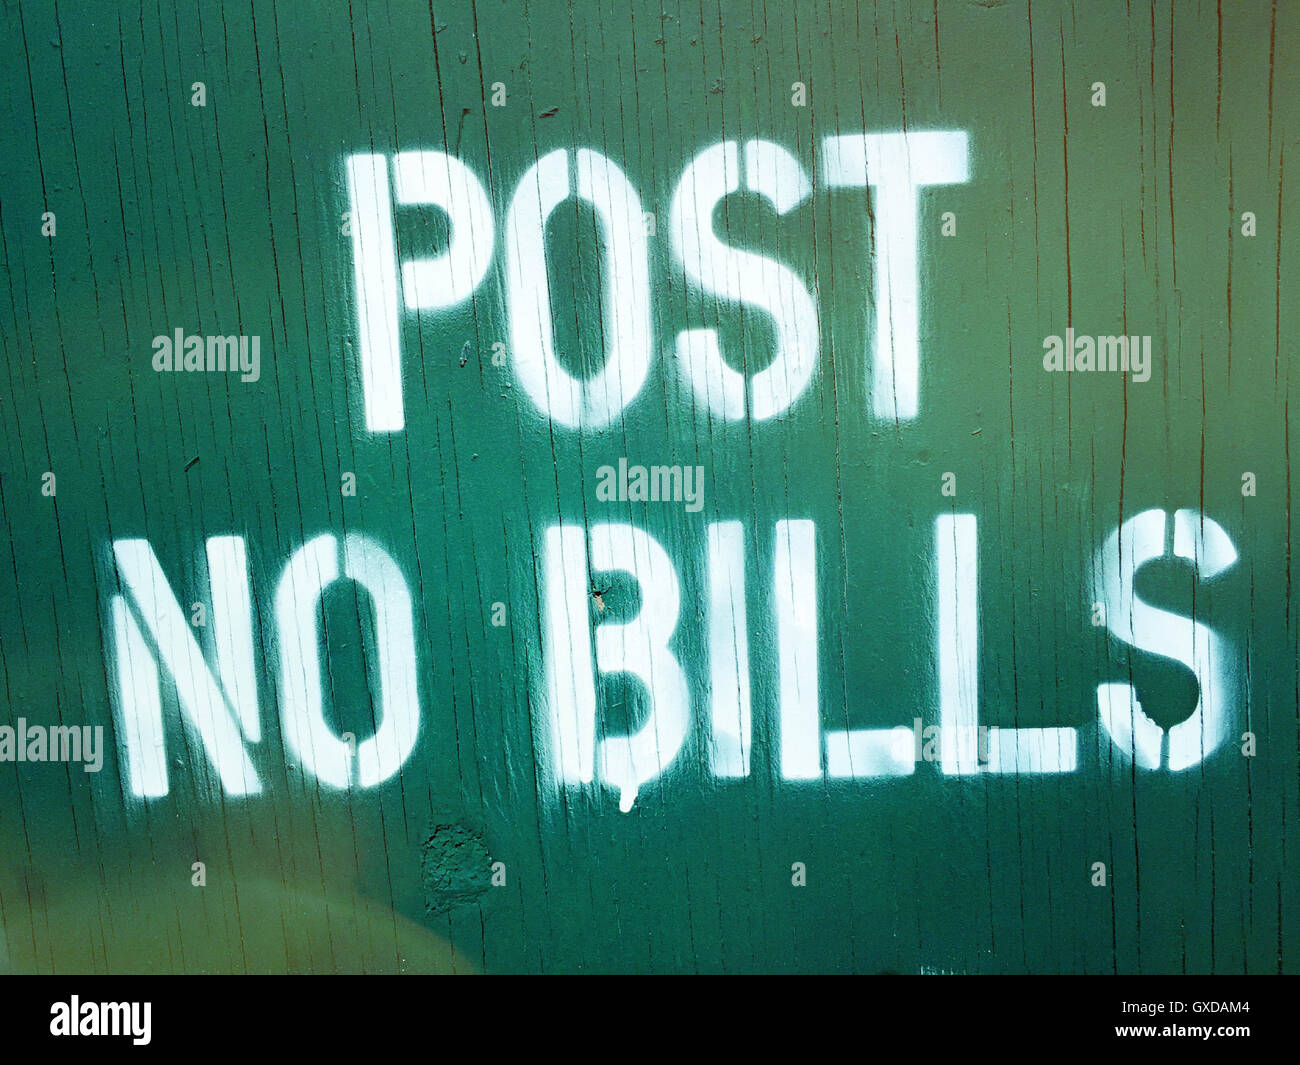 'Post No Bills' Sign Stock Photo